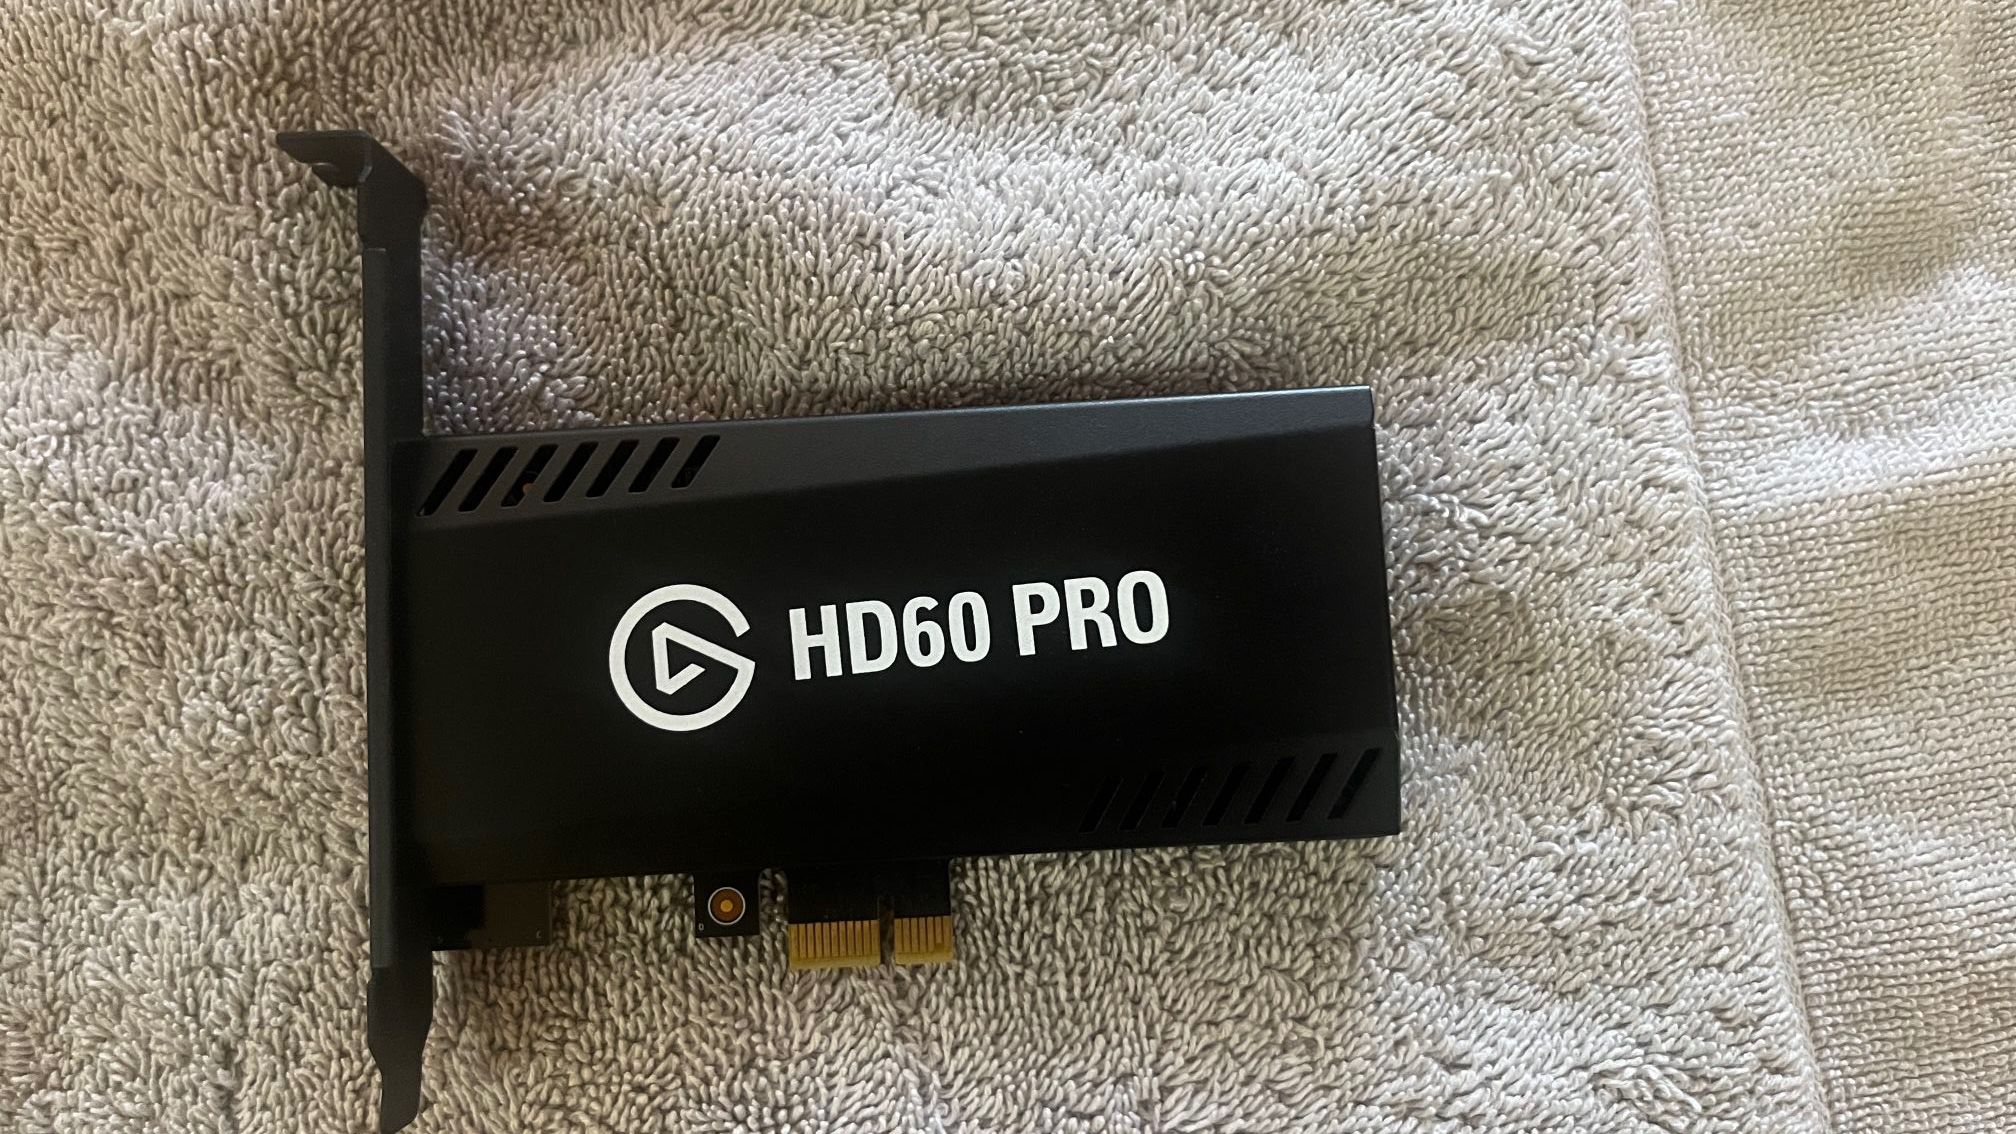 Elgato HD60 Pro1080p60 Capture and Passthrough, PCIe Capture Card